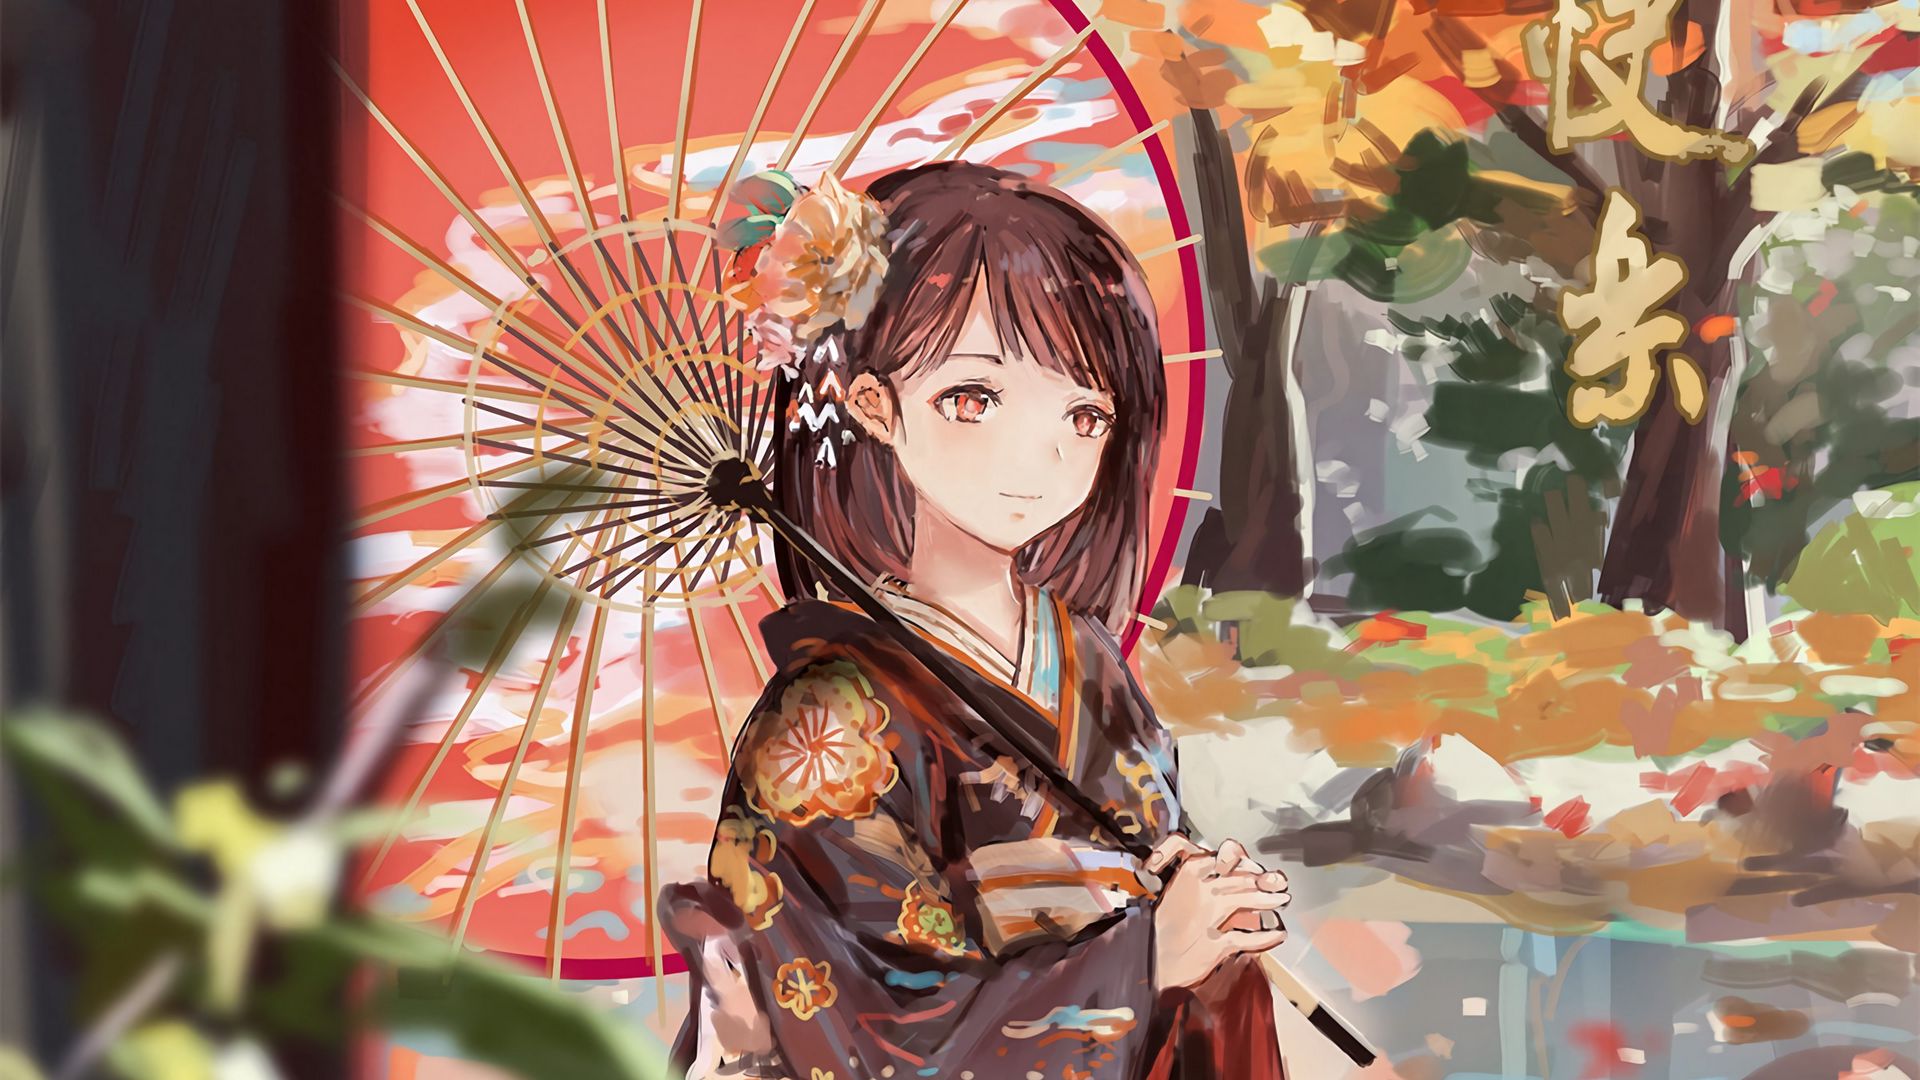 Download wallpaper 1920x1080 girl, umbrella, anime, kimono, garden, autumn full hd, hdtv, fhd, 1080p HD background